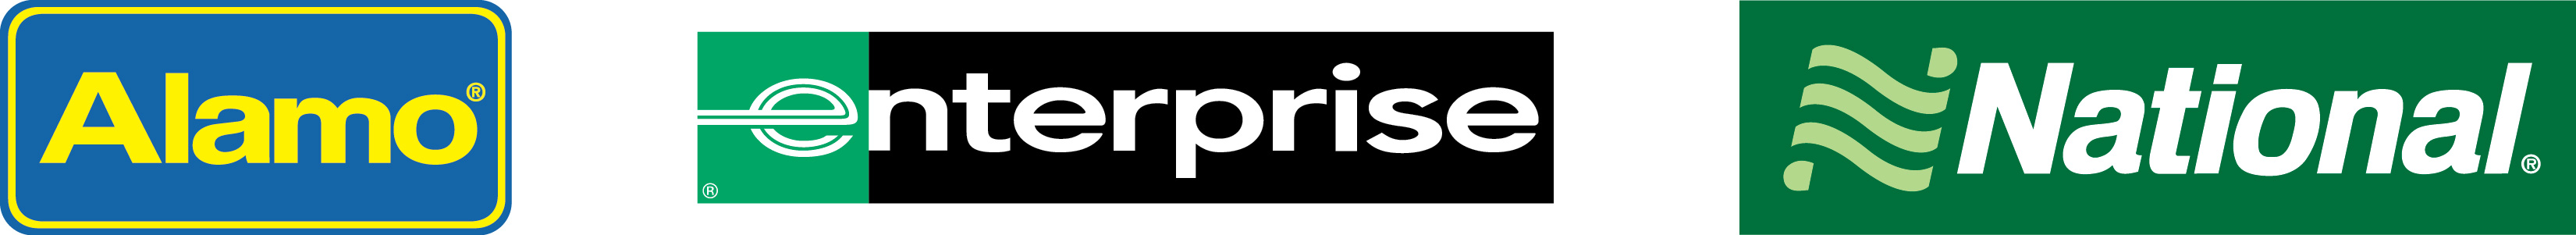 Enterprise Logo 